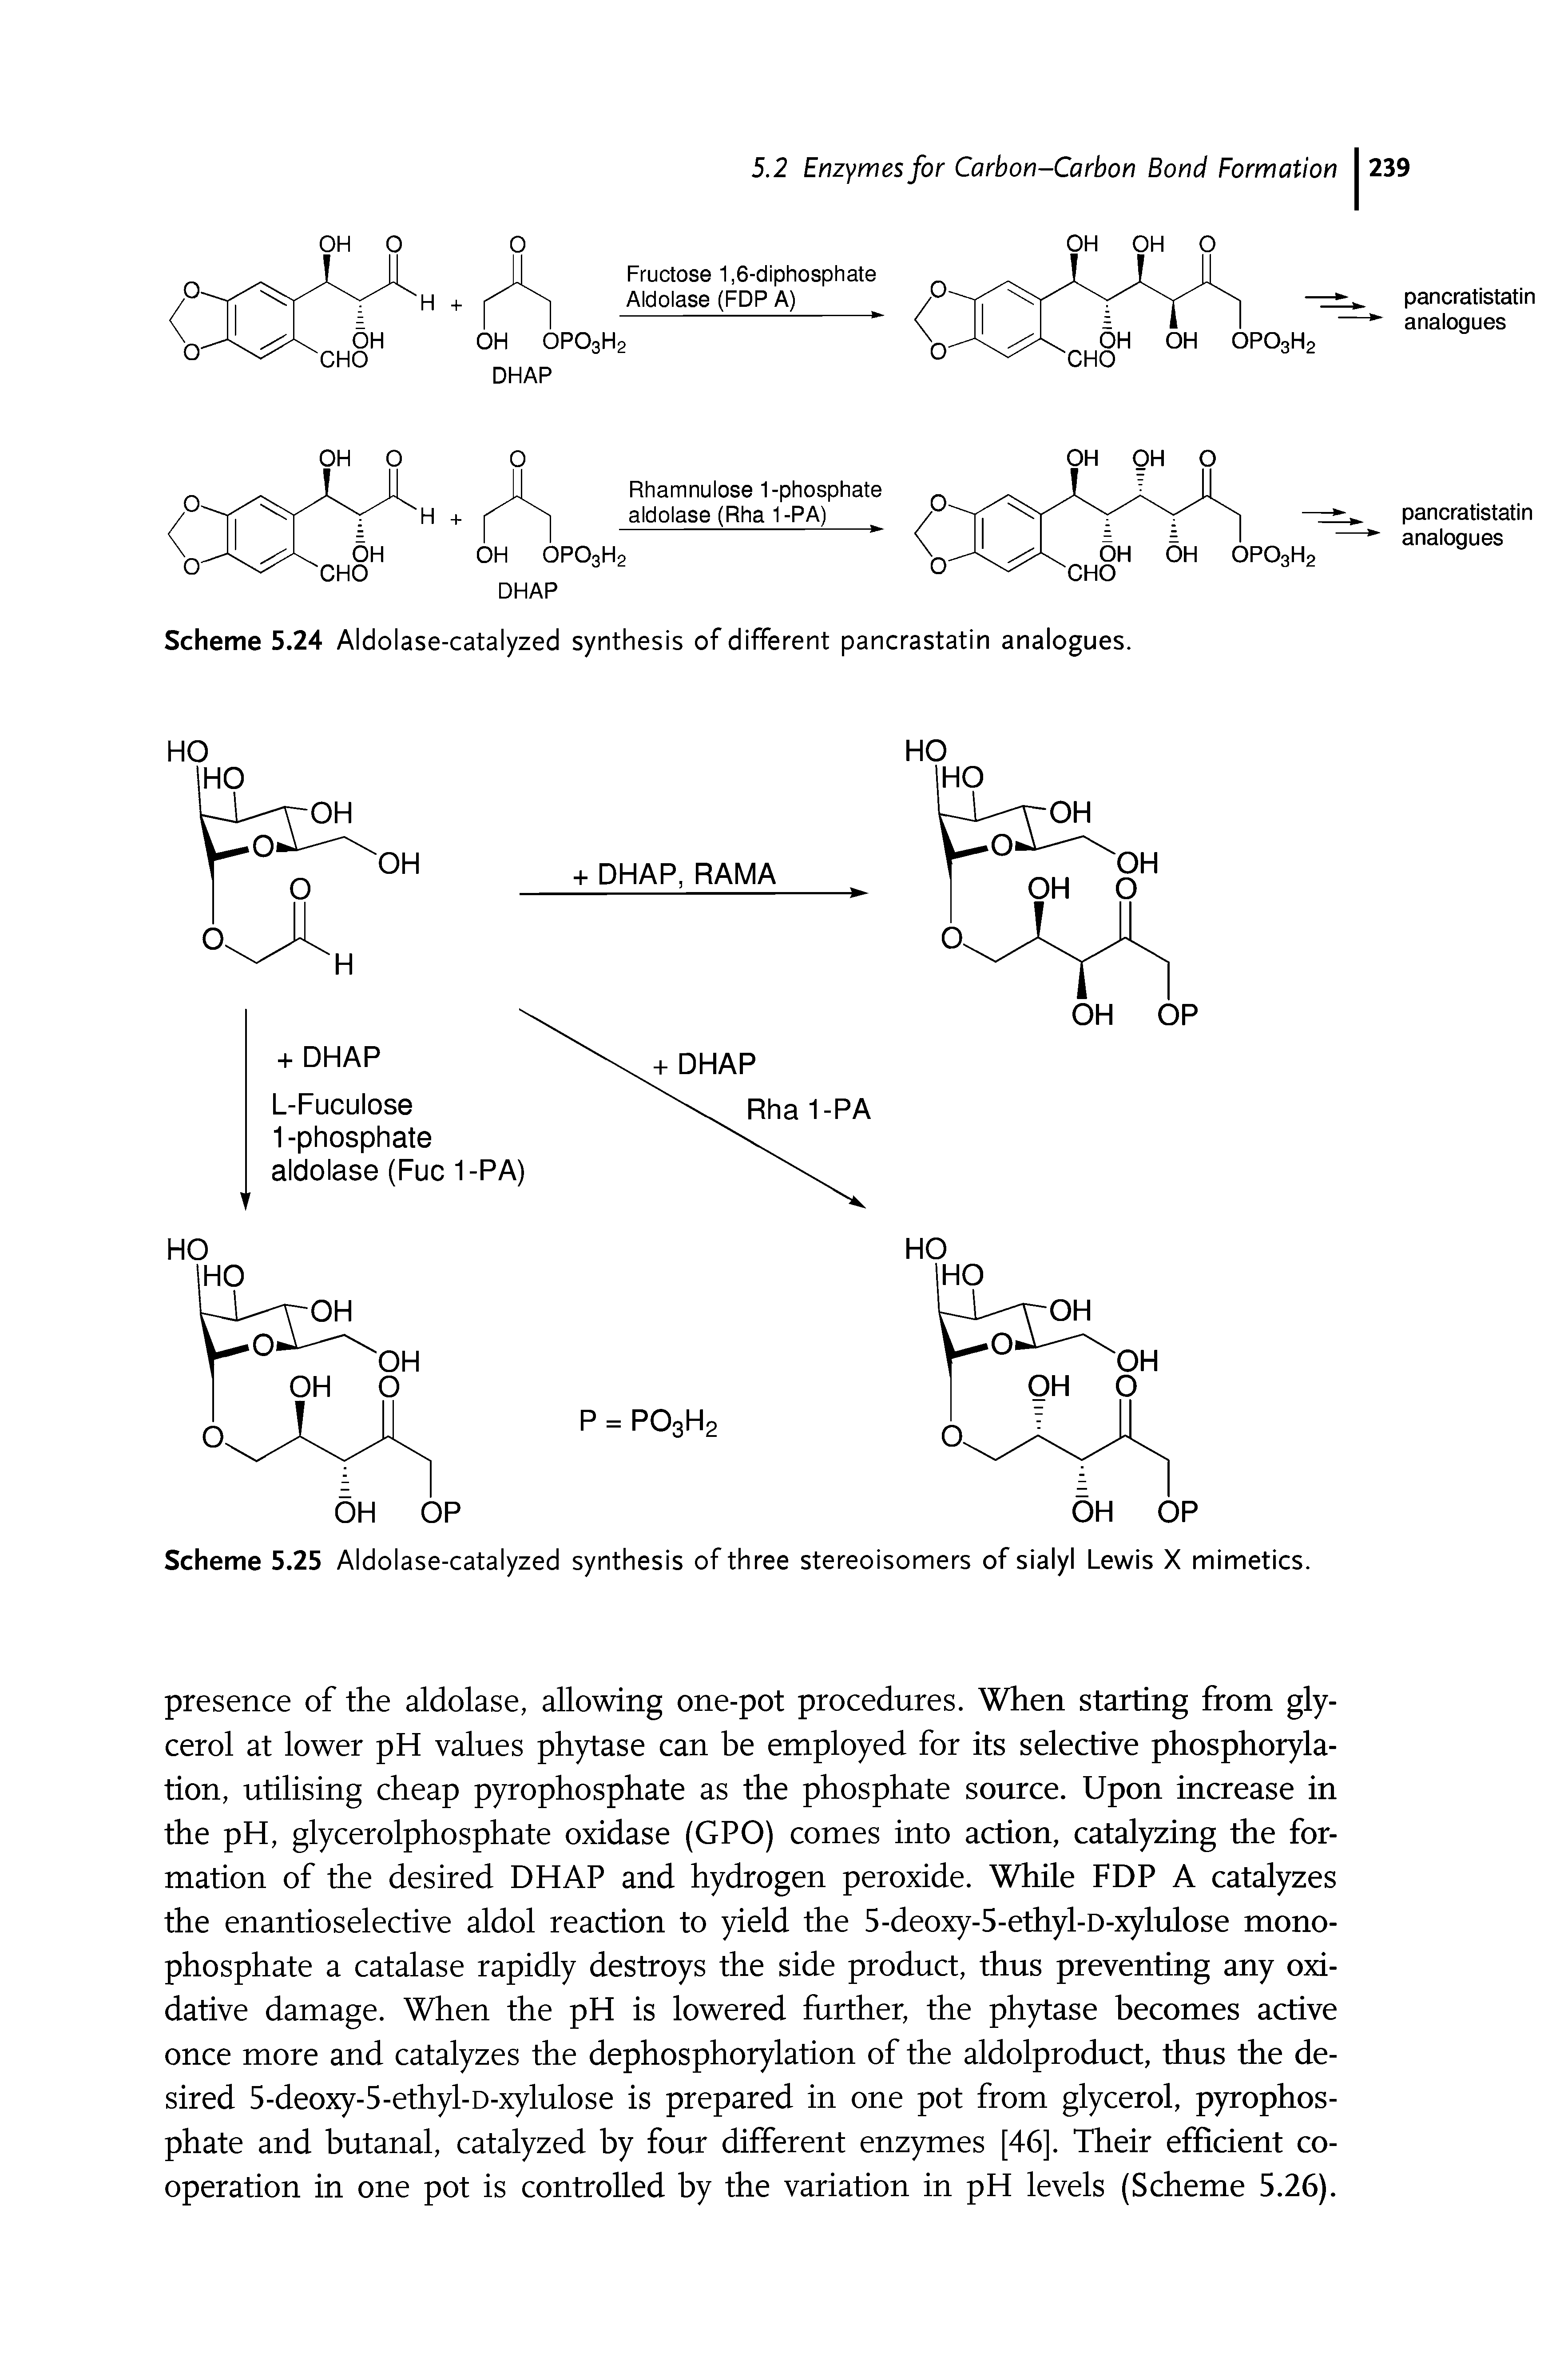 Scheme 5.25 Aldolase-catalyzed synthesis of three stereoisomers of sialyl Lewis X mimetics.